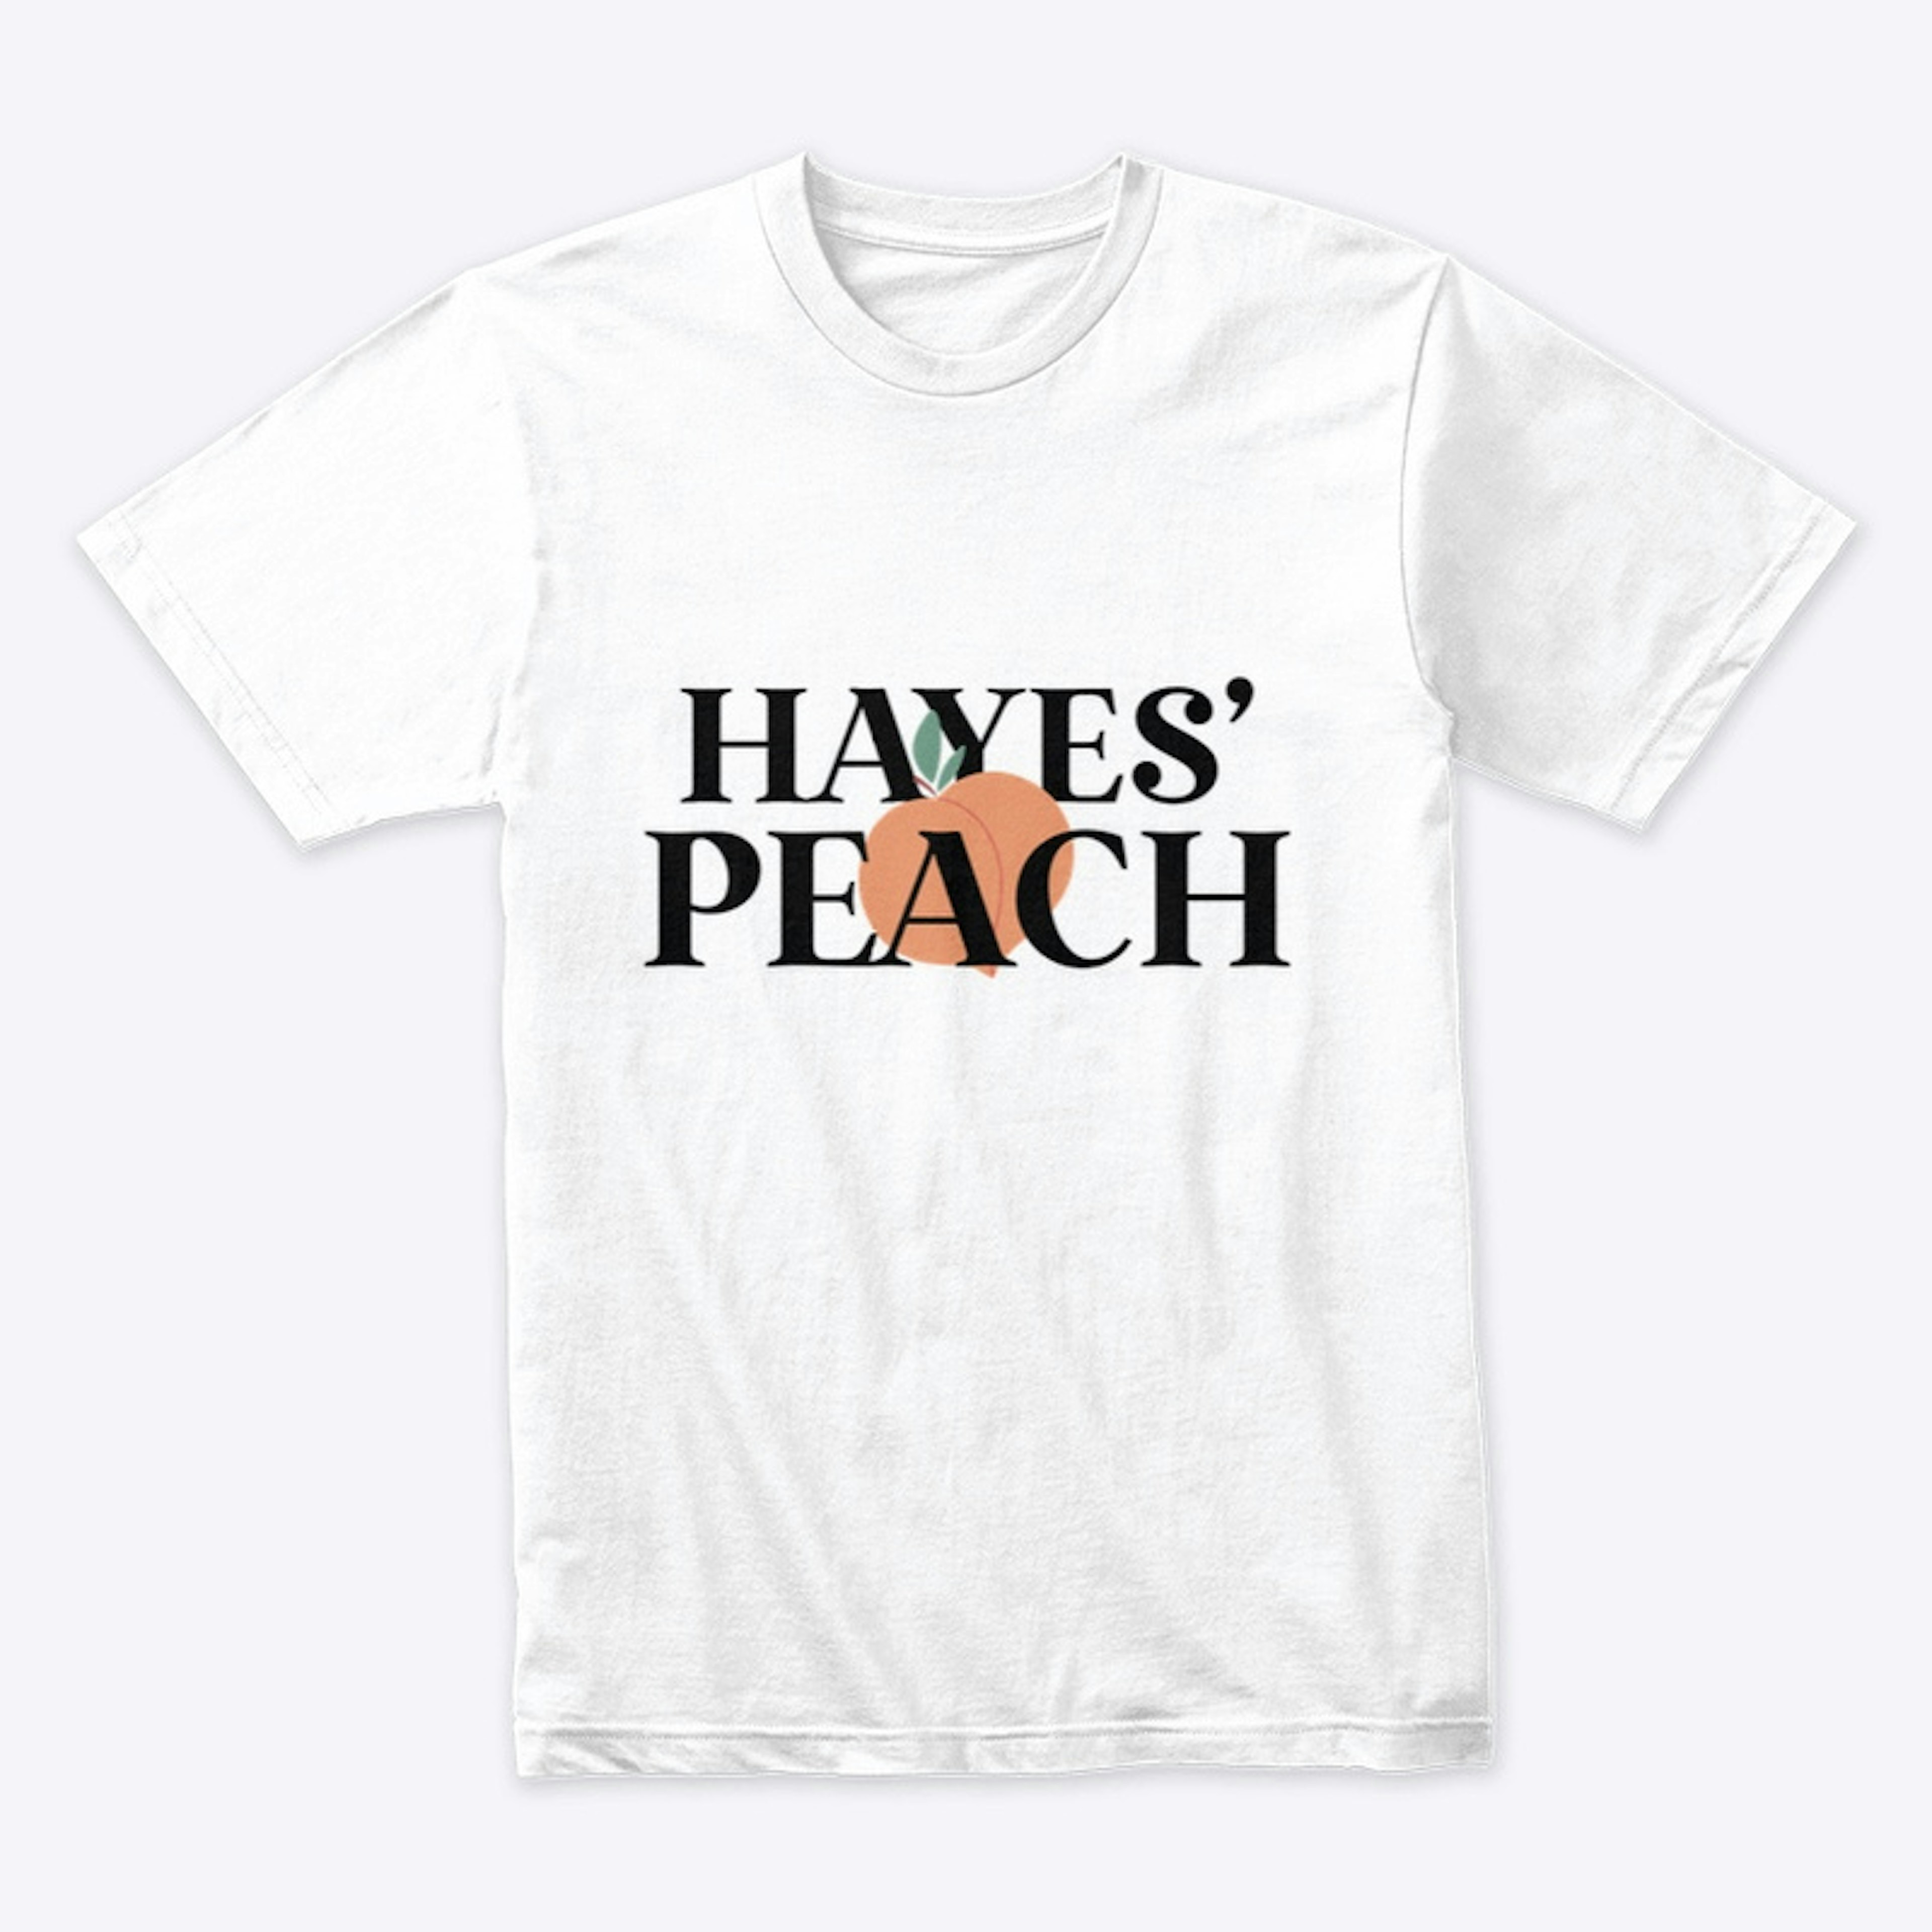 Hayes' Peach